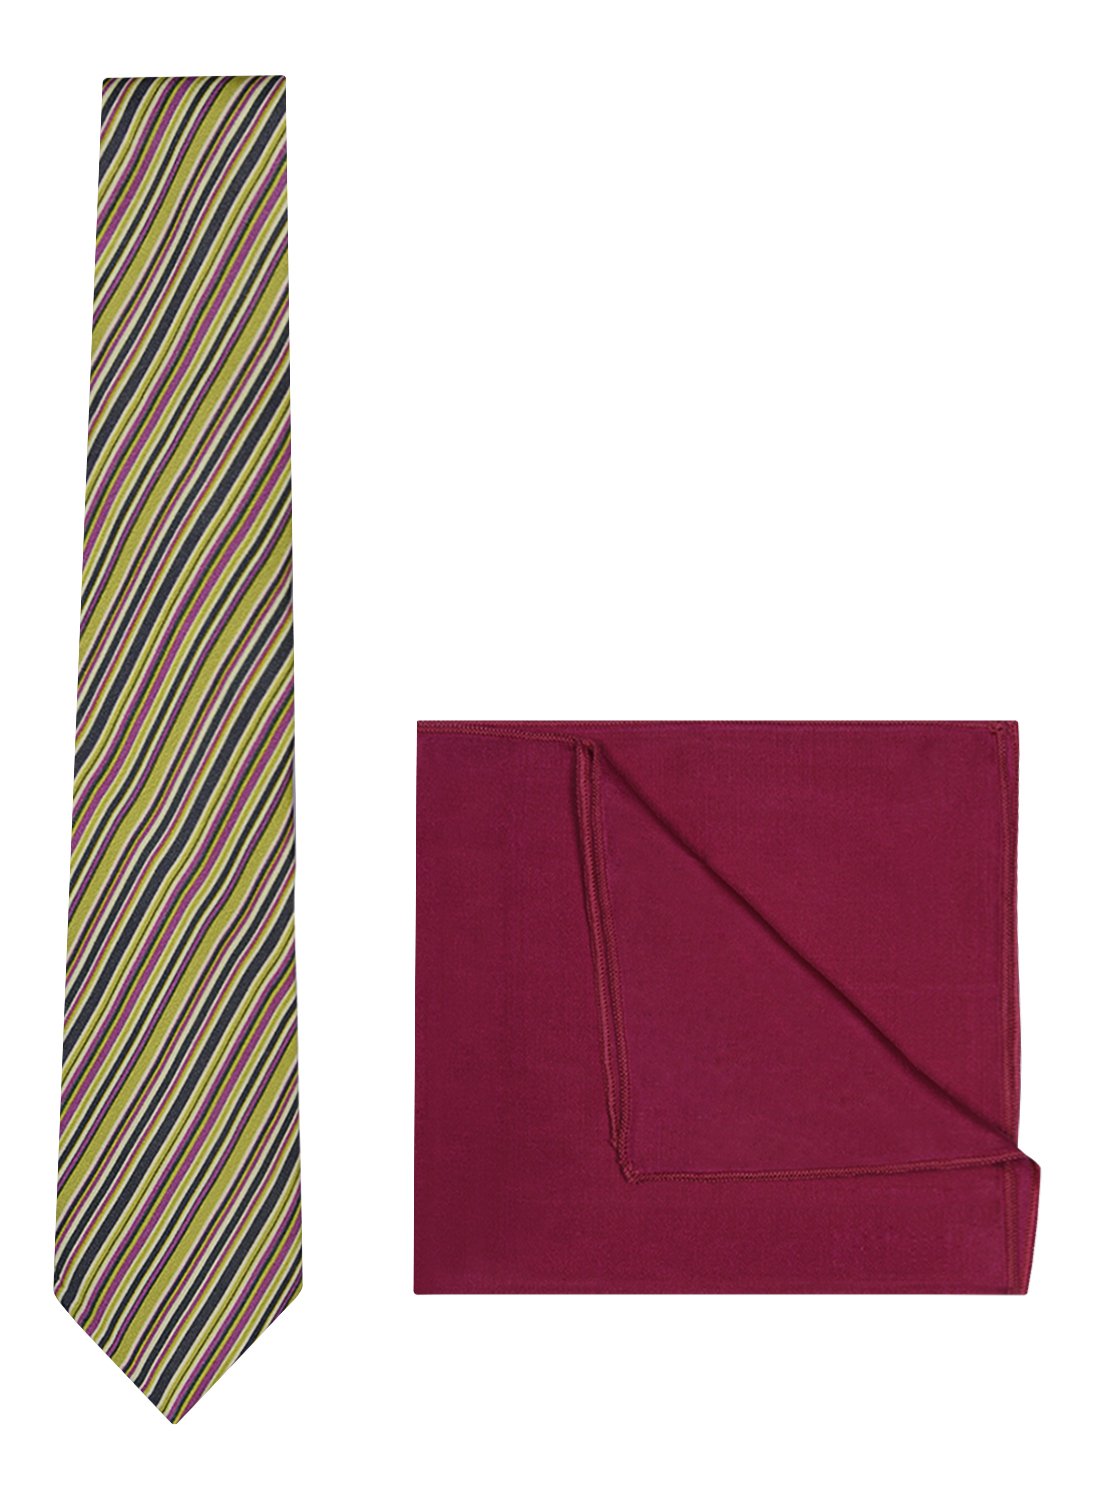 Chokore Multi-color Silk Tie from Plaids line & Plain Pink color Silk Pocket Square set